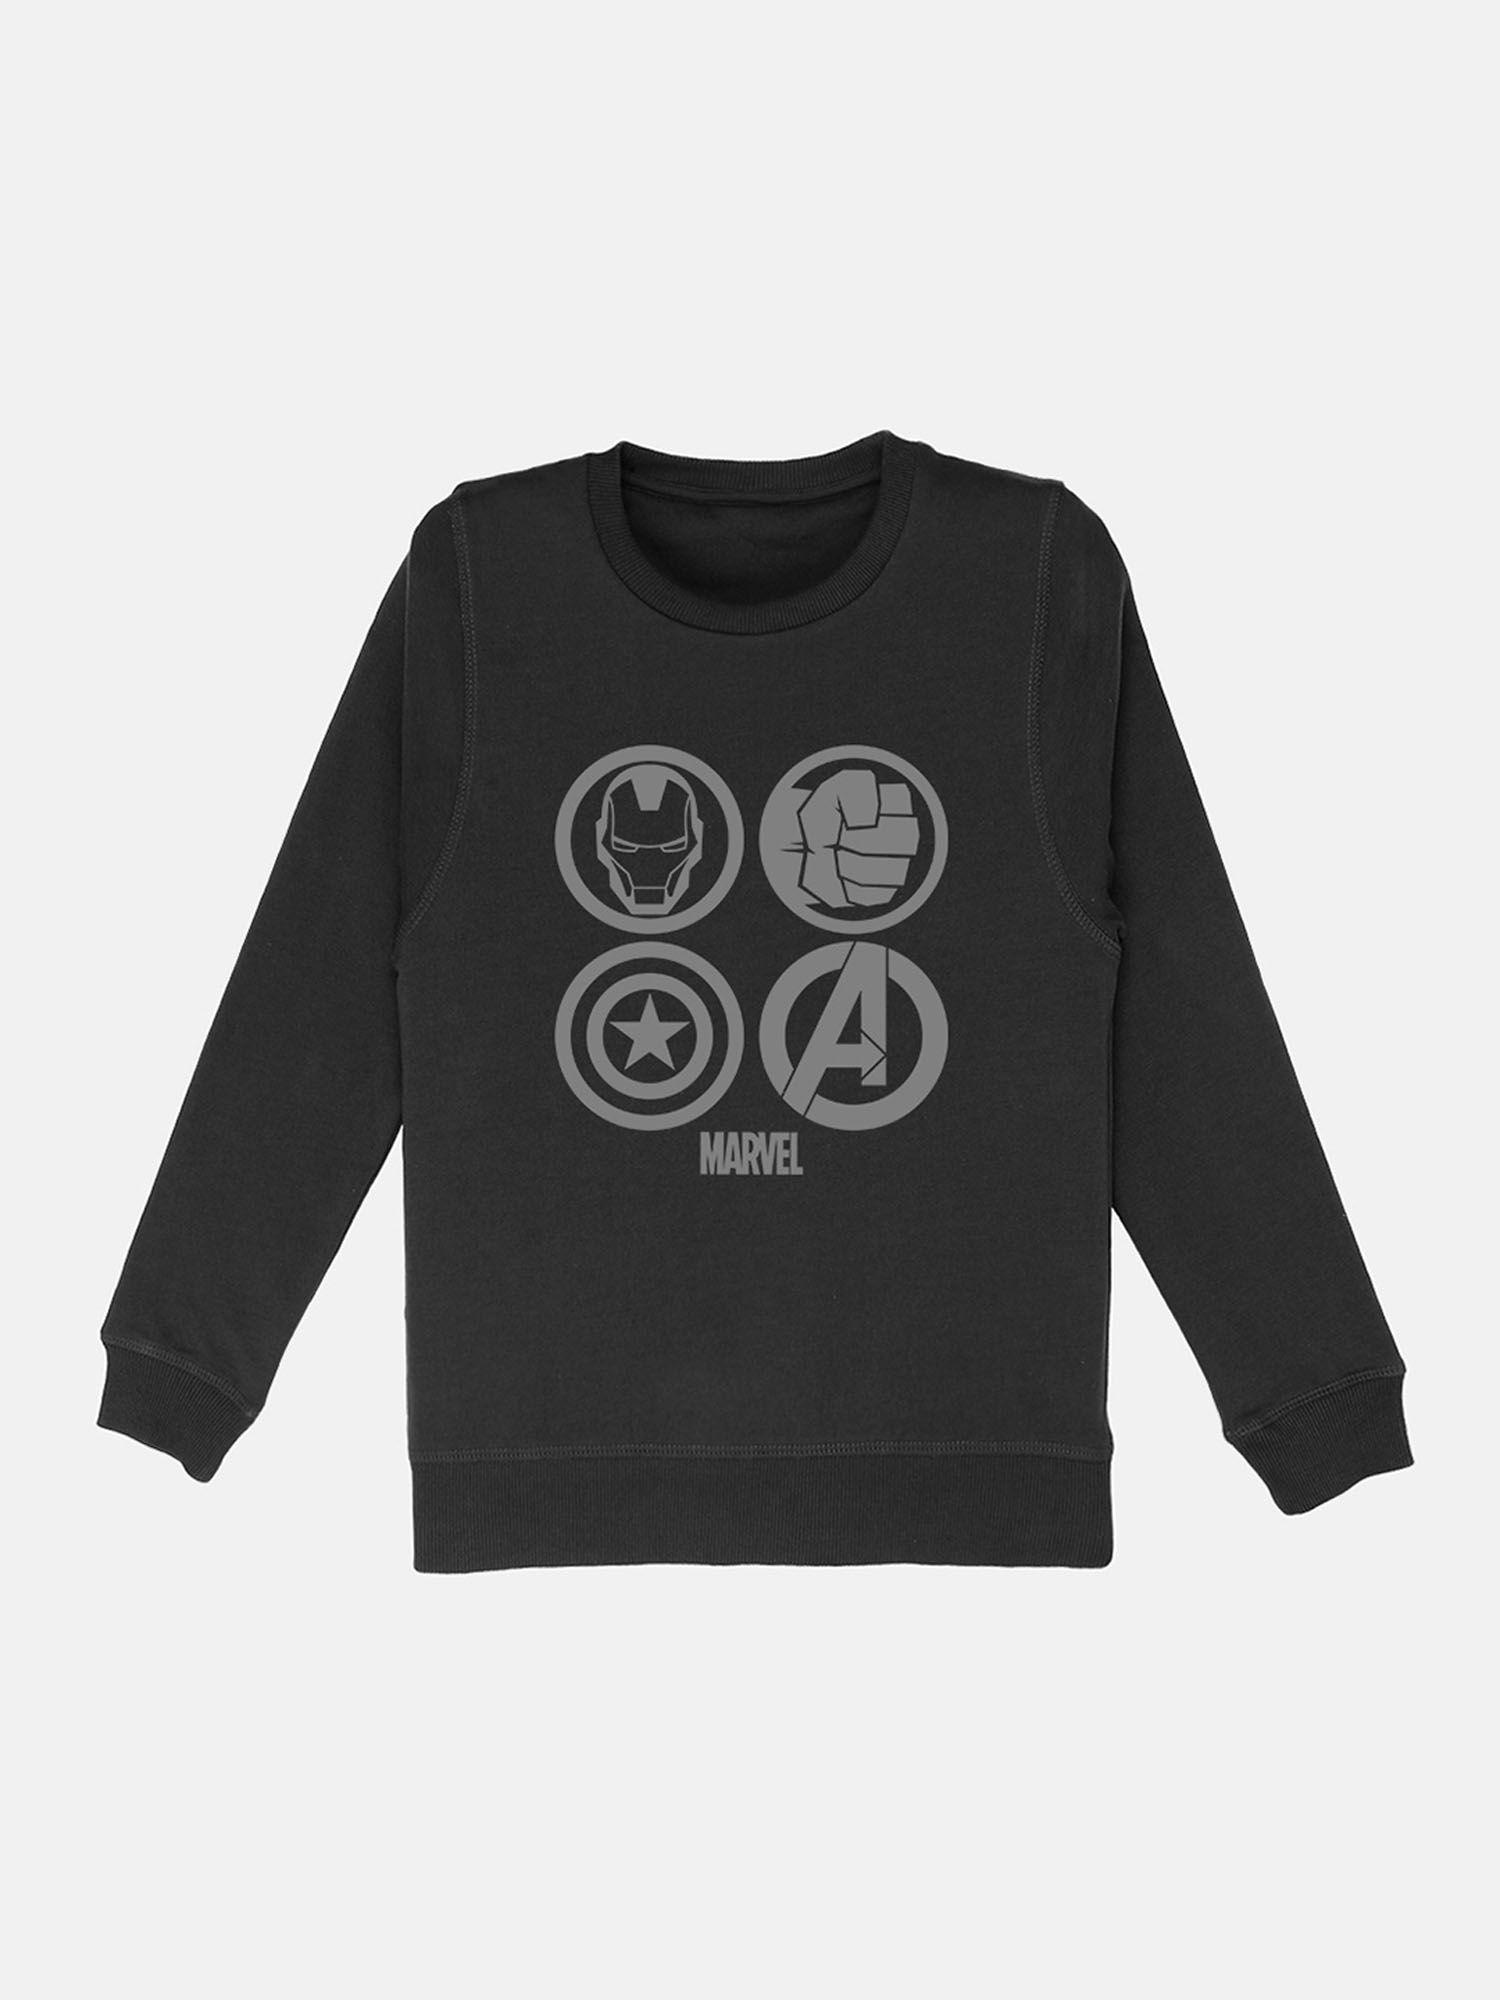 avengers printed black full sleeve sweater